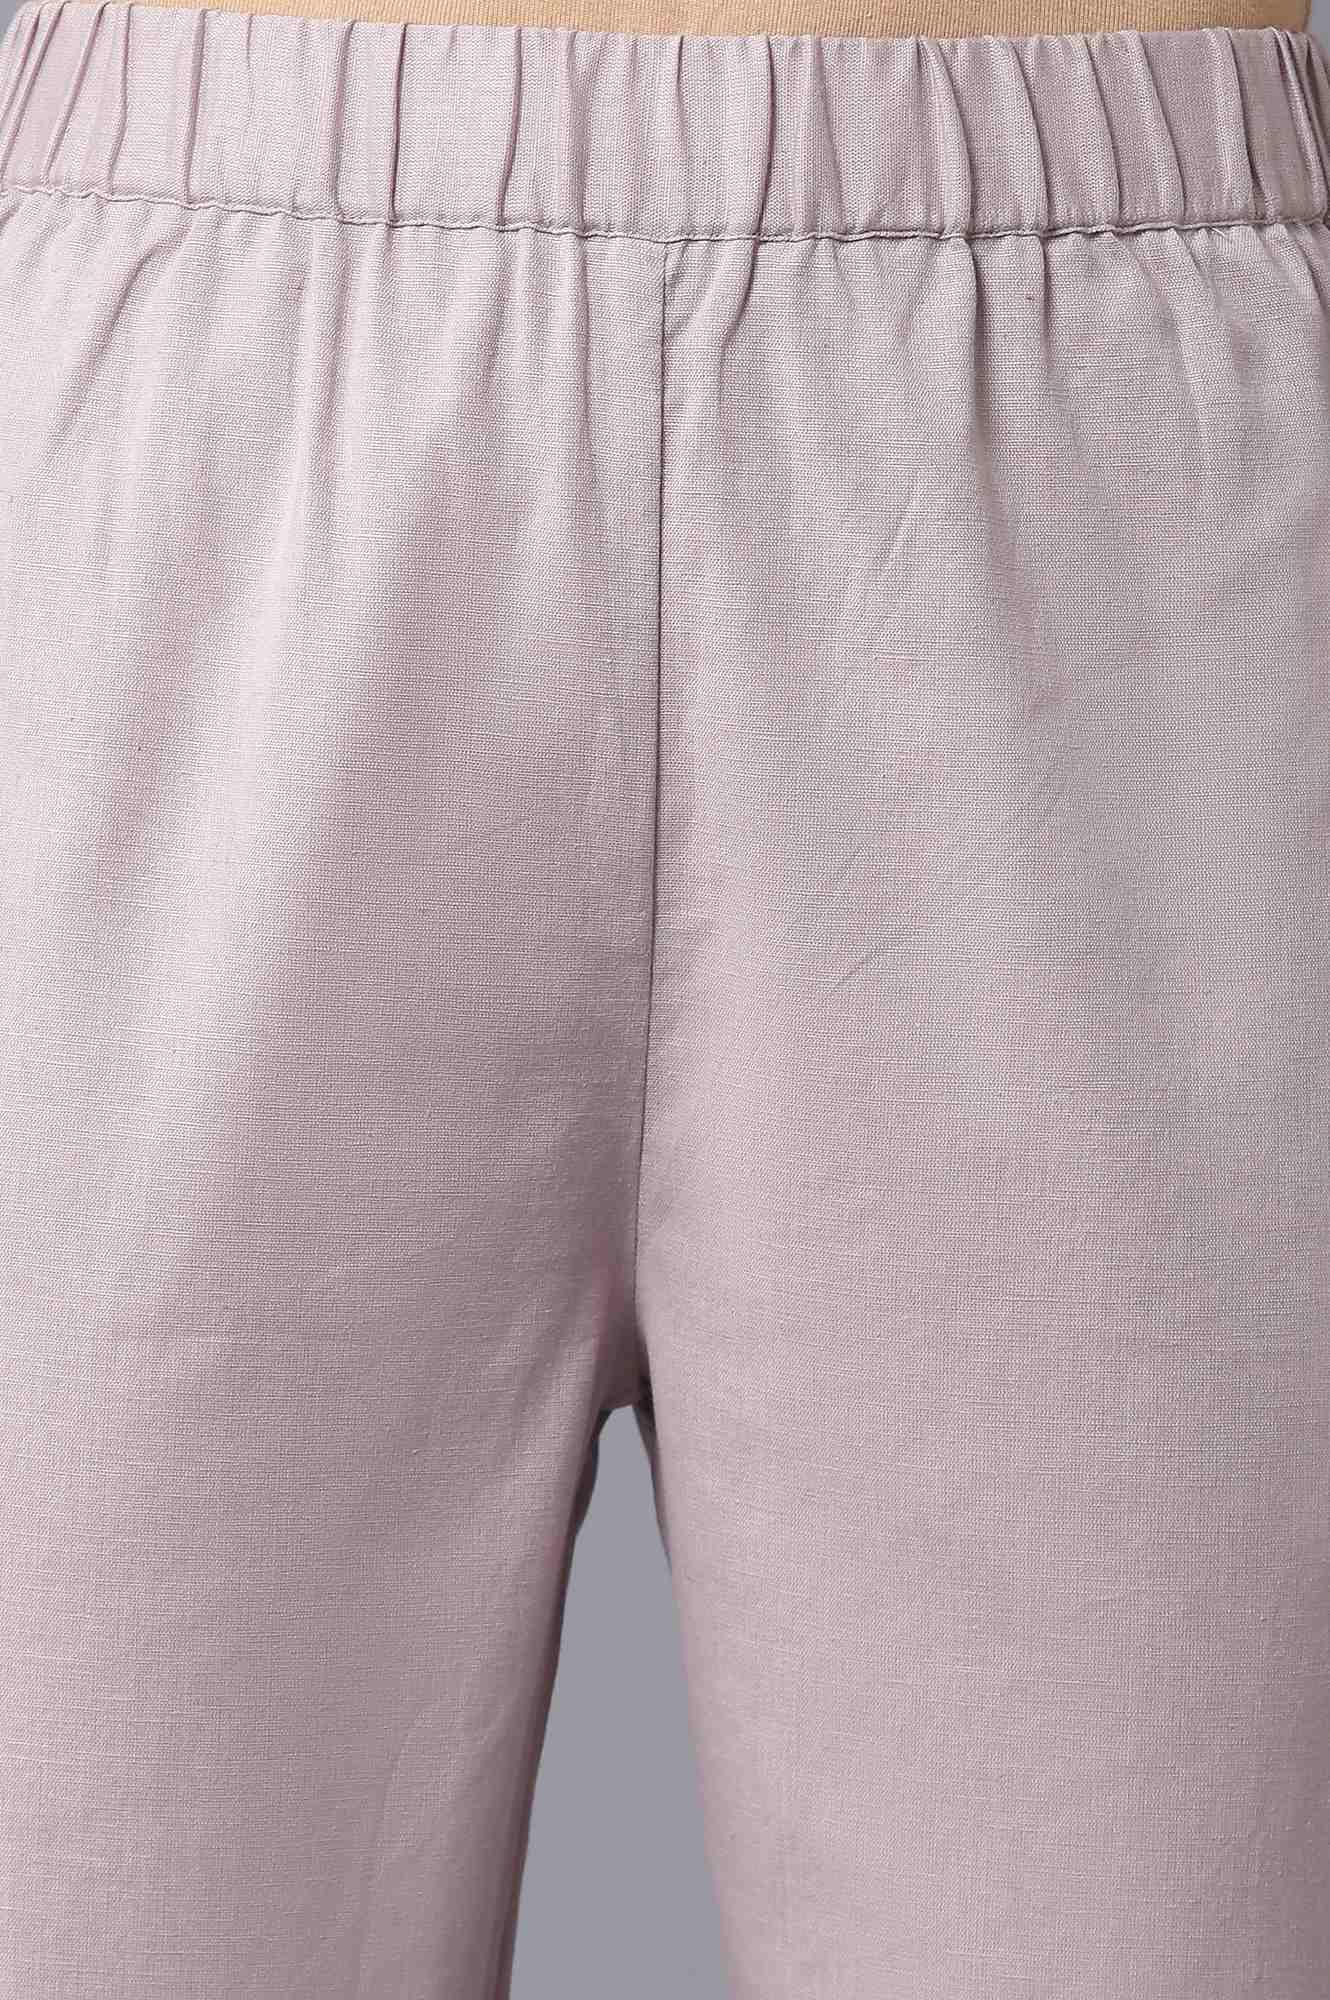 Beige A-Line Cotton kurta With Light Purple Slim Pants And Dupatta - wforwoman